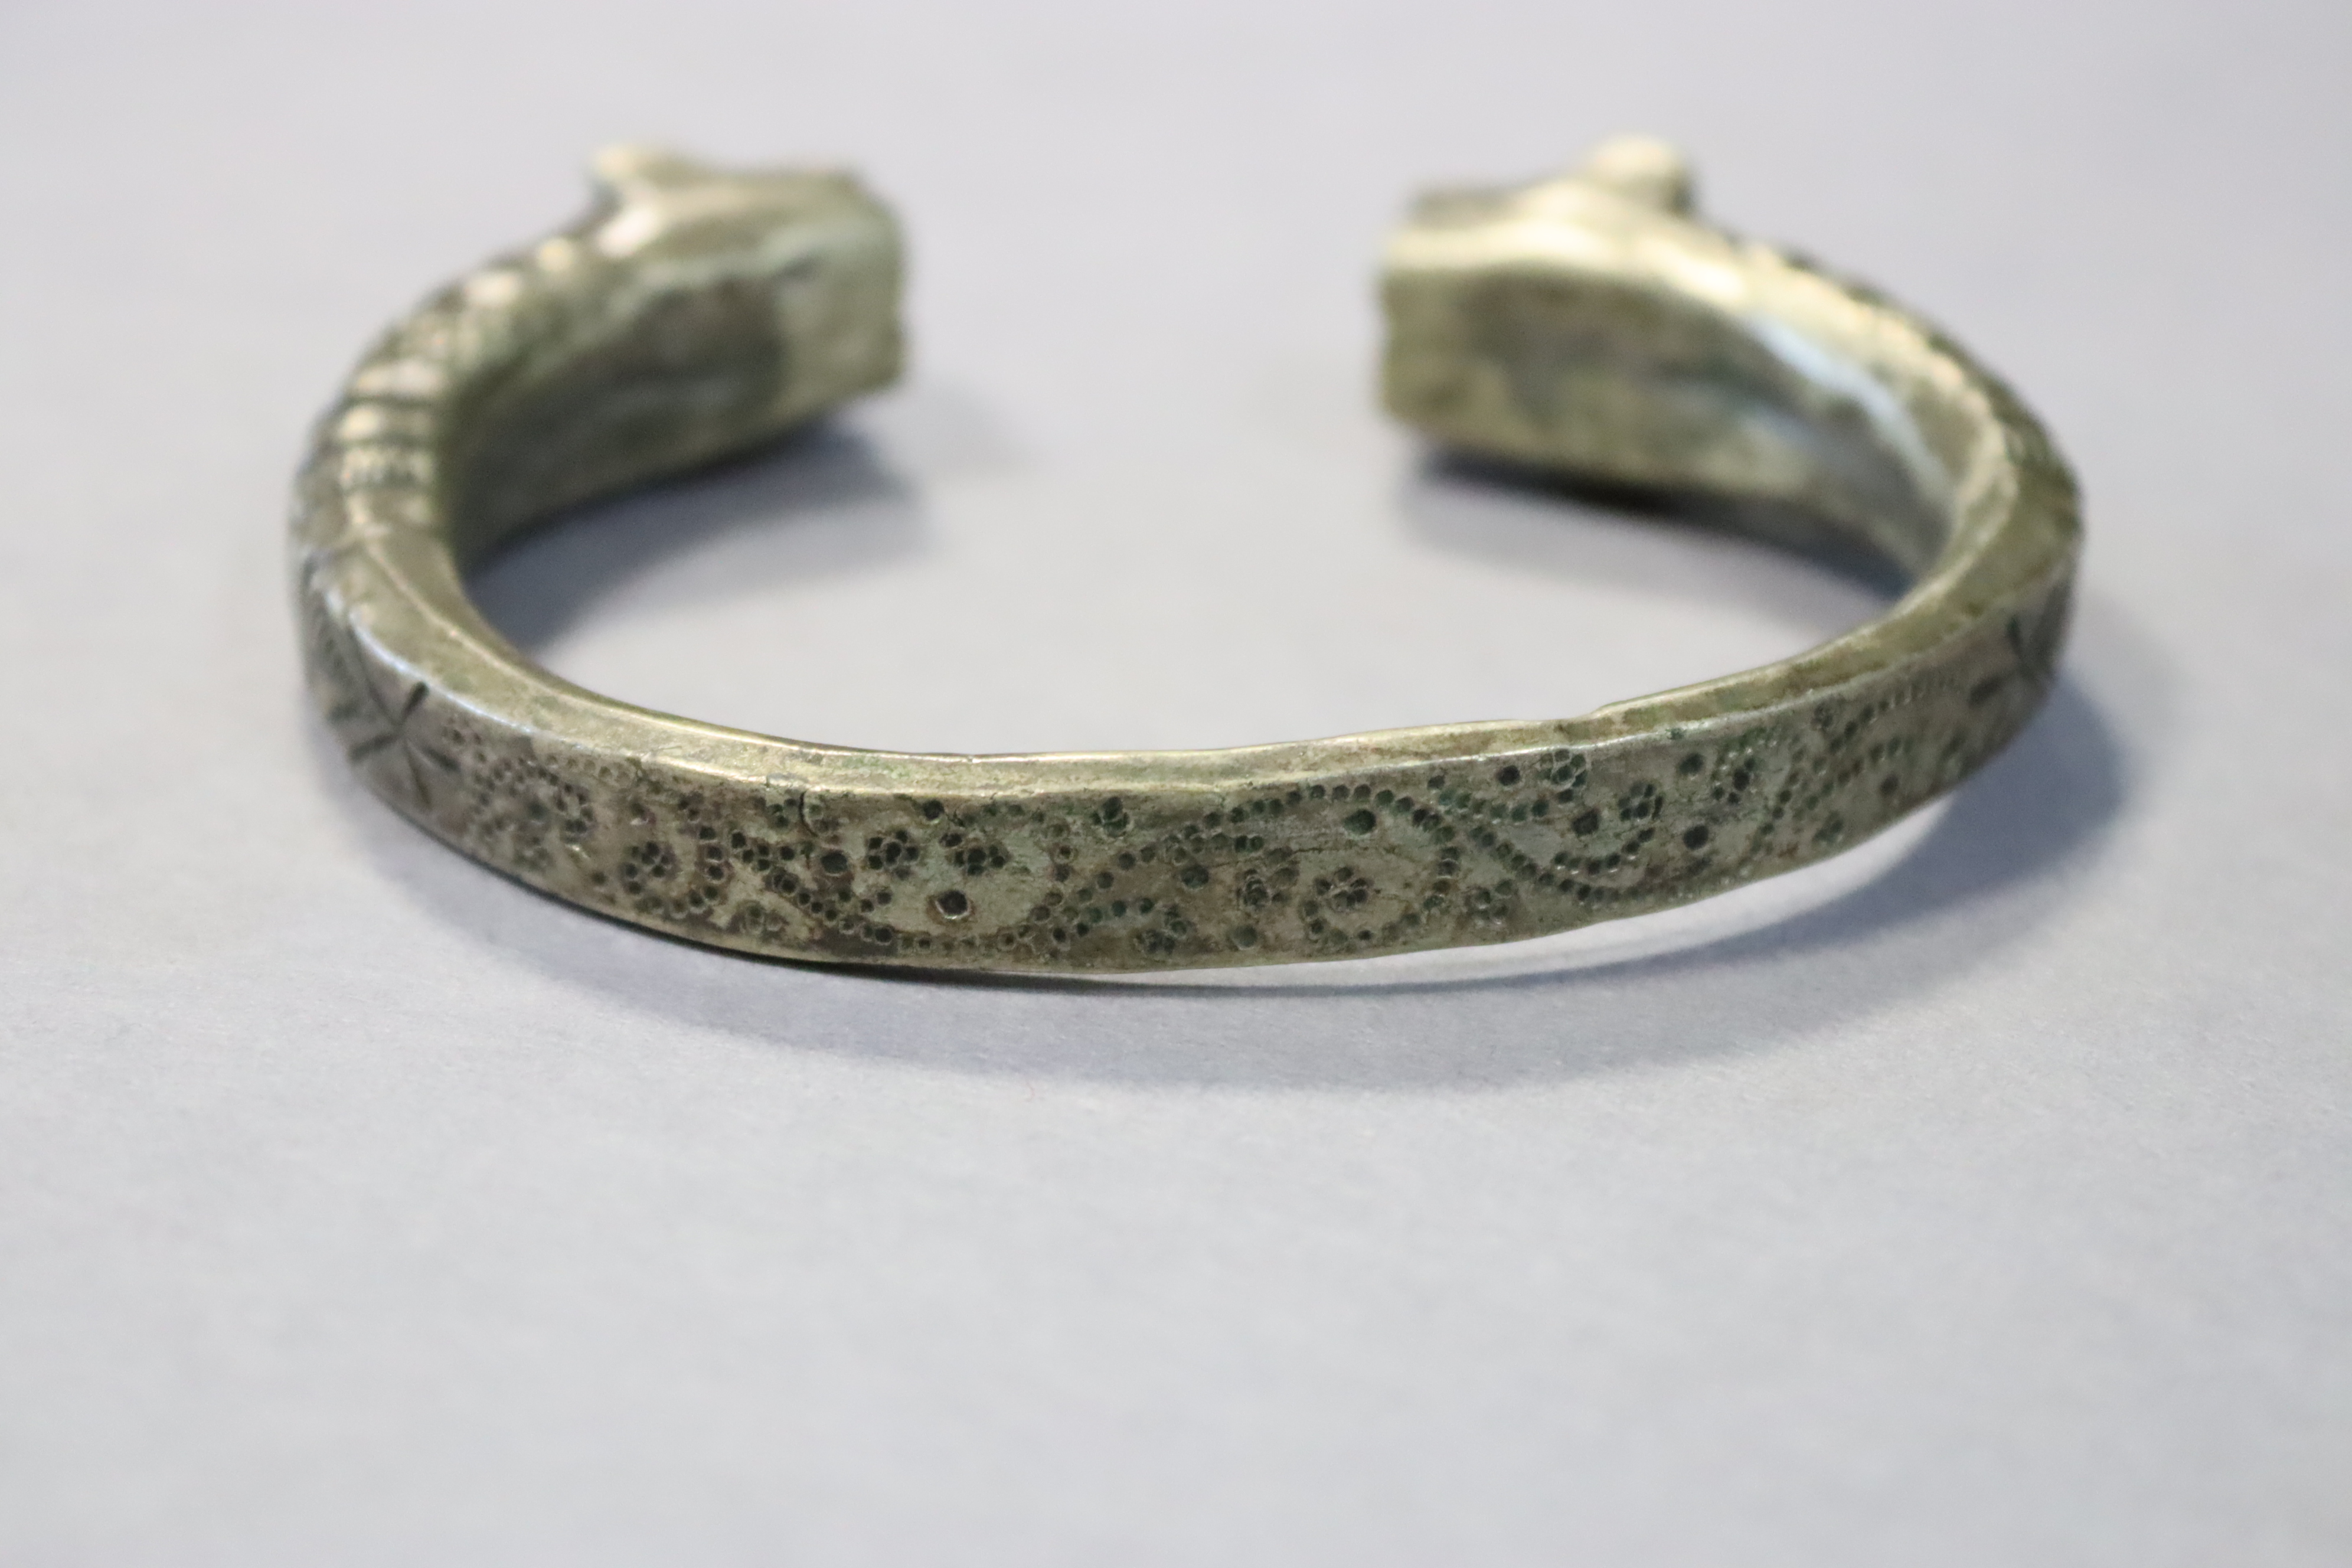 A Masonic regalia pendant; a silvered-metal slave’s bracelet; & an arts & crafts – style copper & - Image 3 of 8